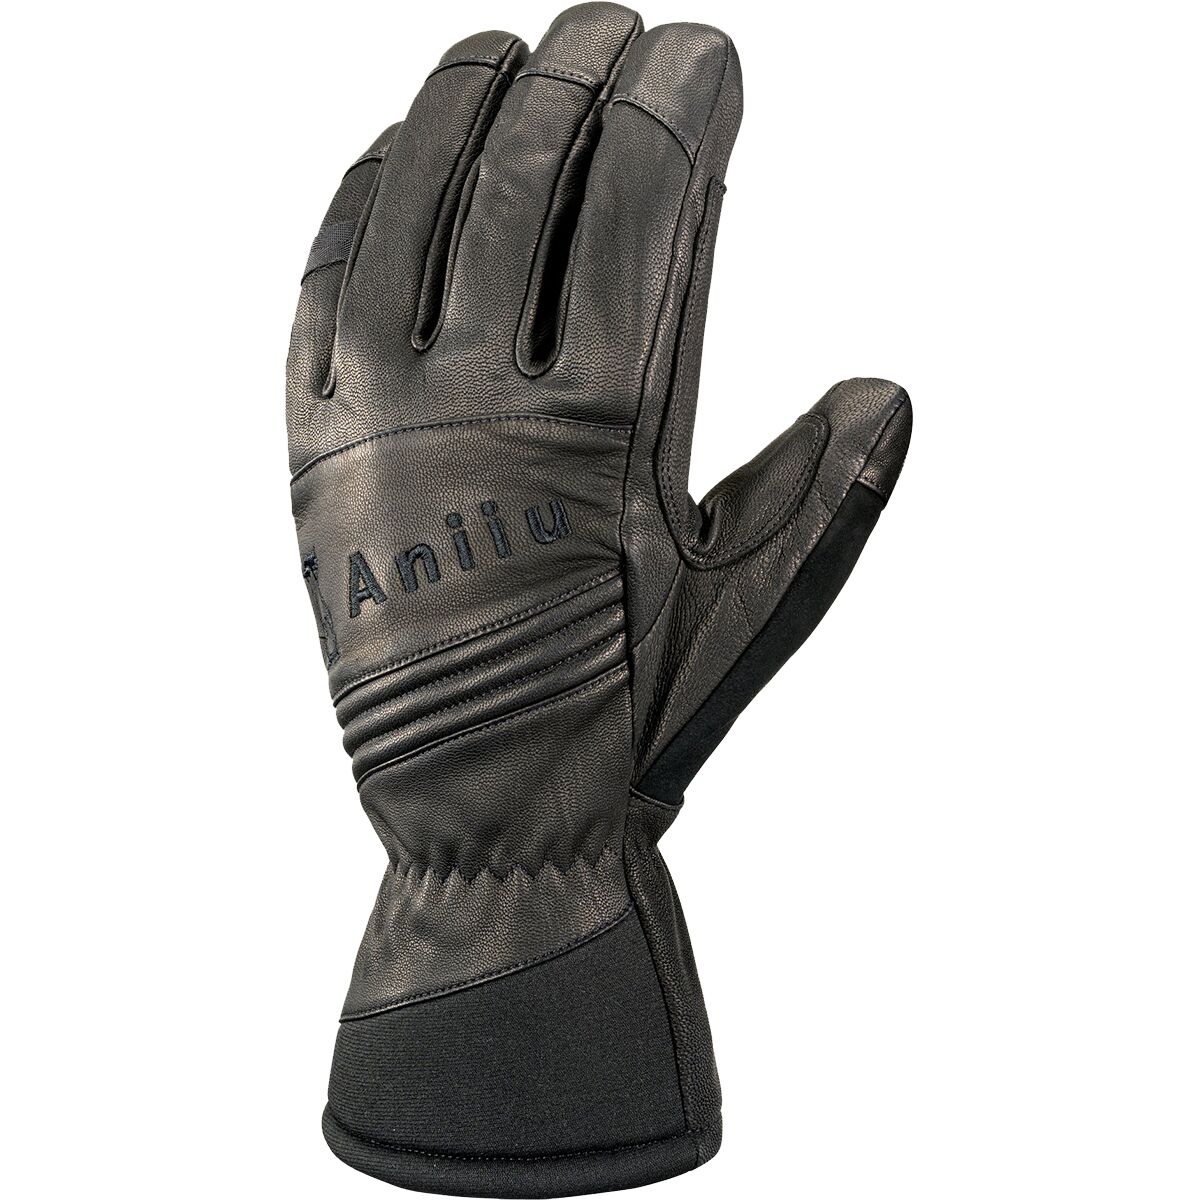 Aniiu Tyree Short Pro Glove - Men's